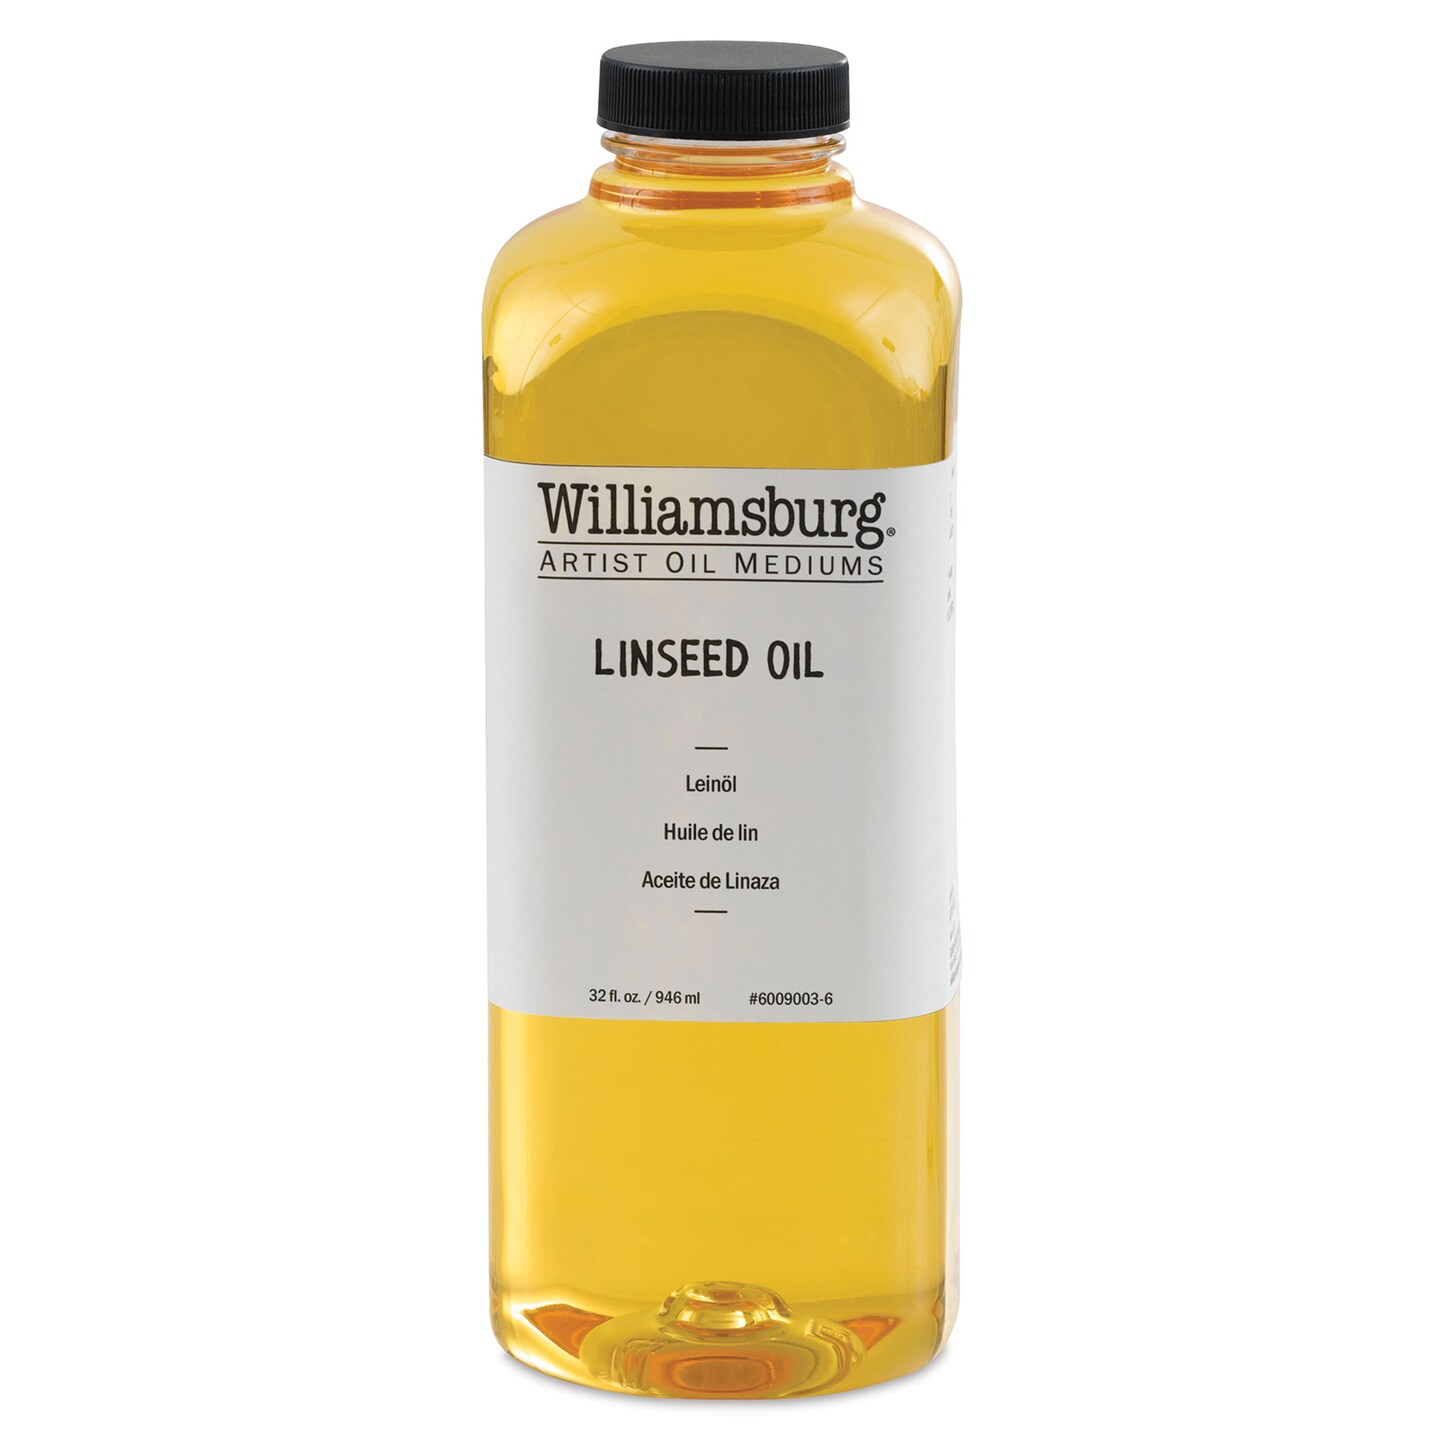 Williamsburg Artist Linseed Oil - 32 oz bottle